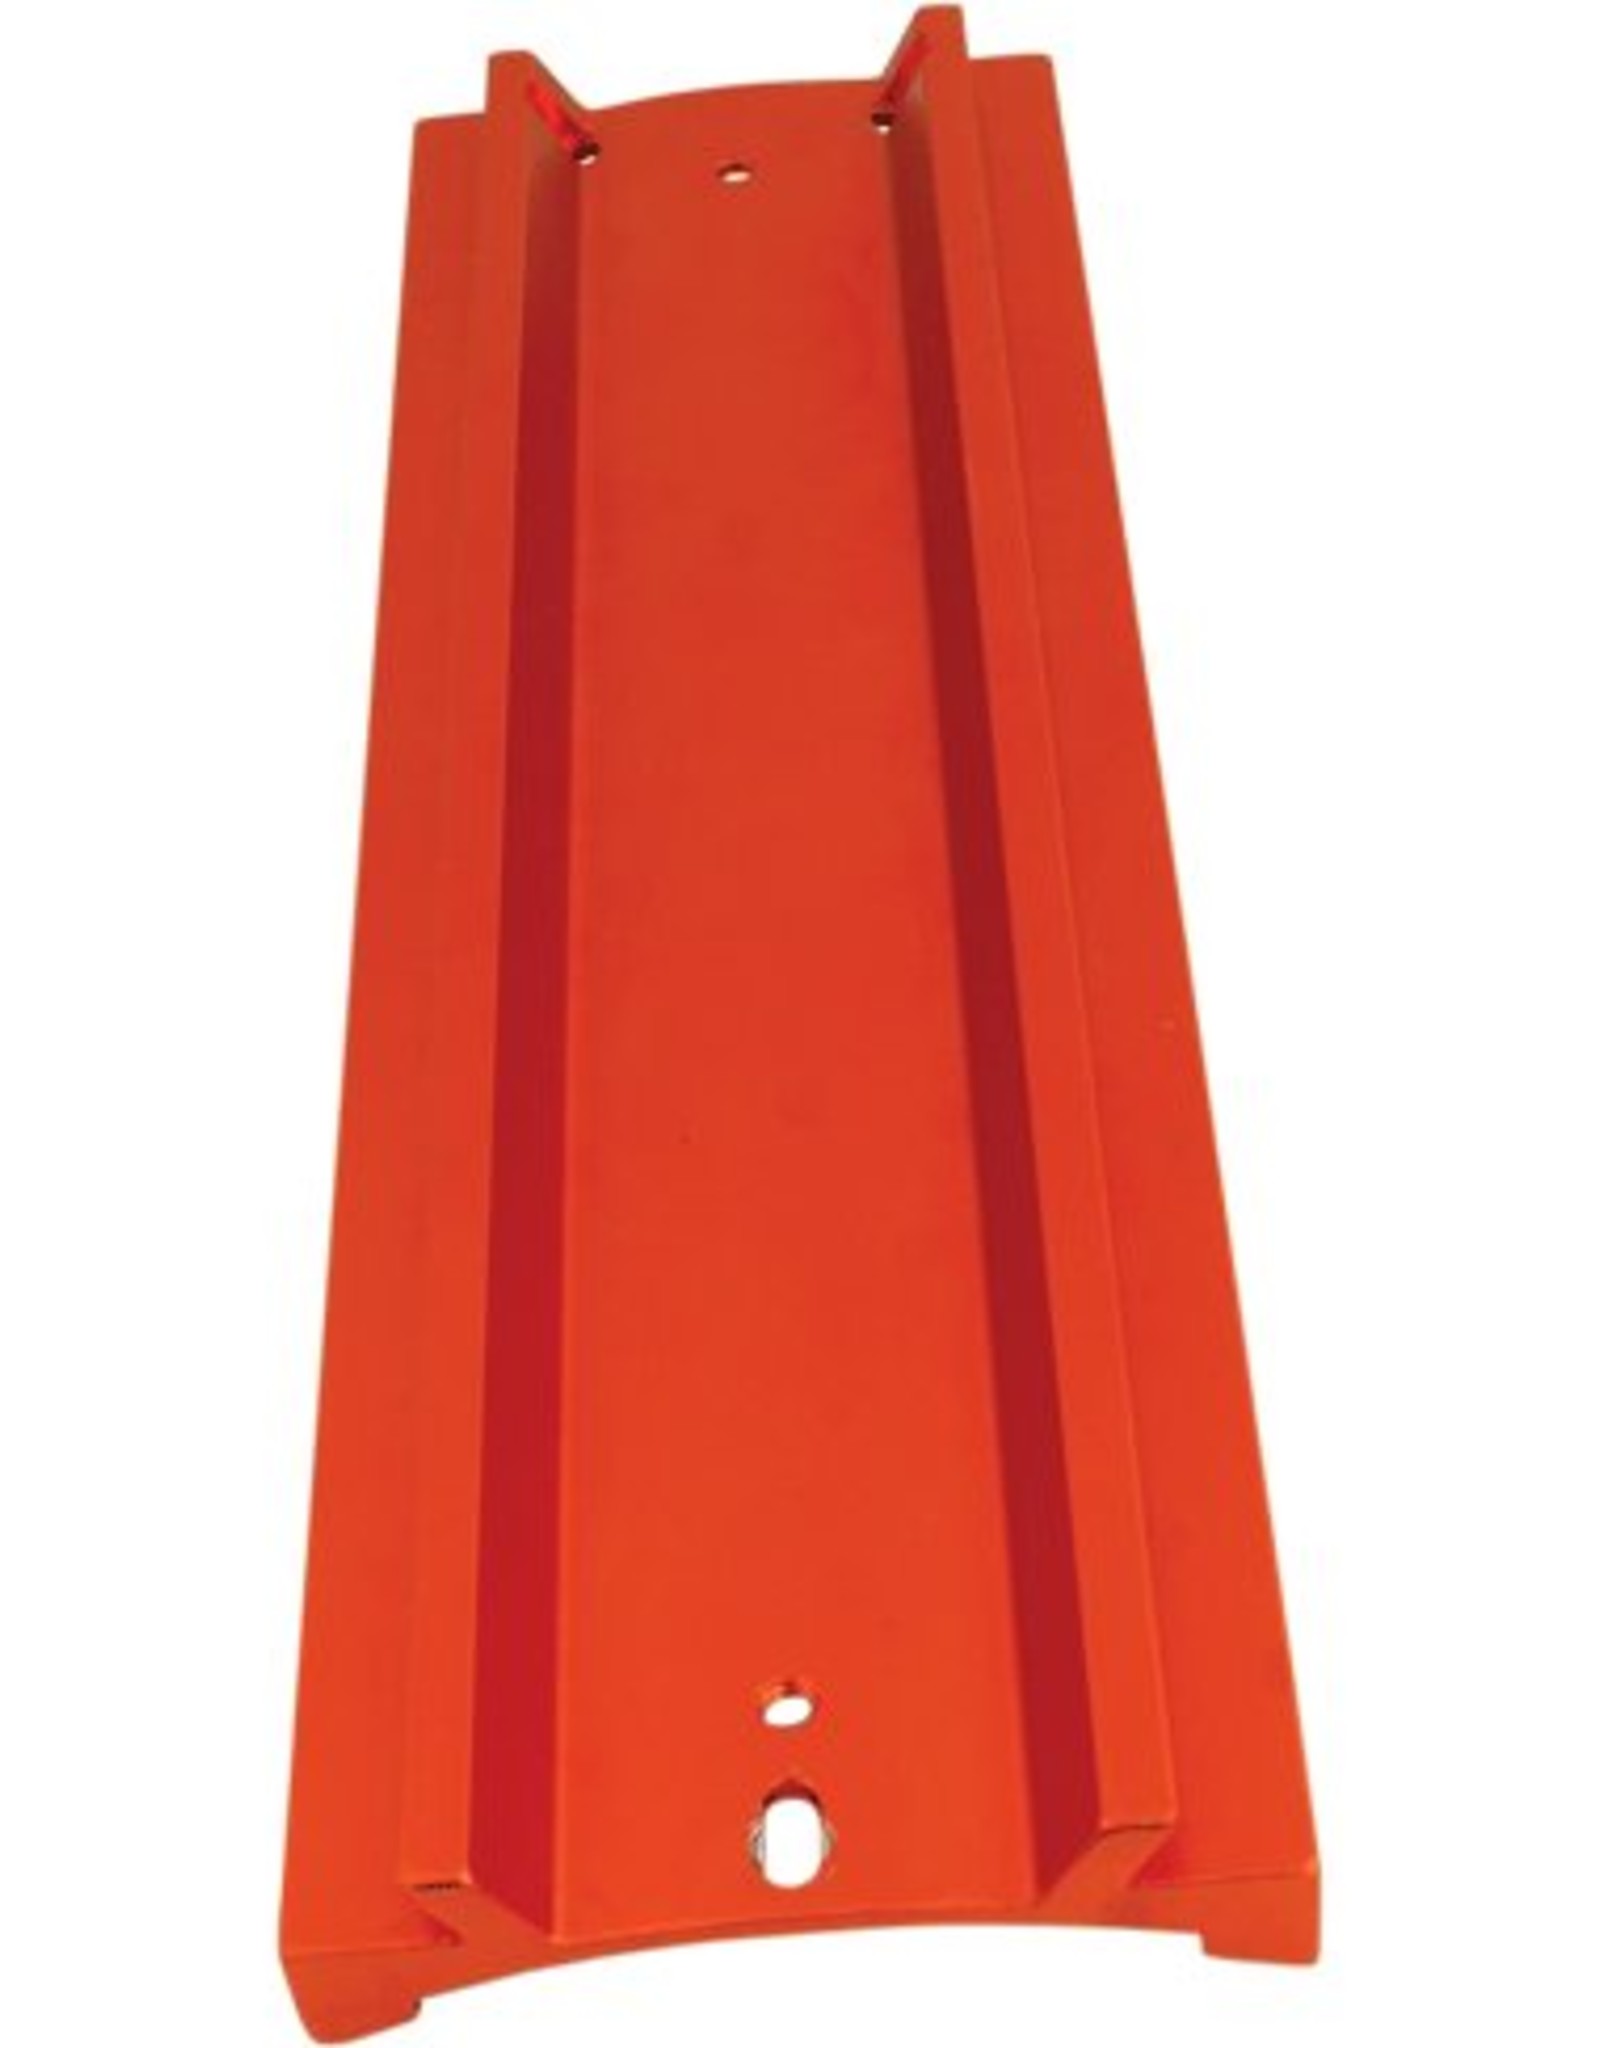 Celestron Celestron 9.25-inch Dovetail bar (CGE)